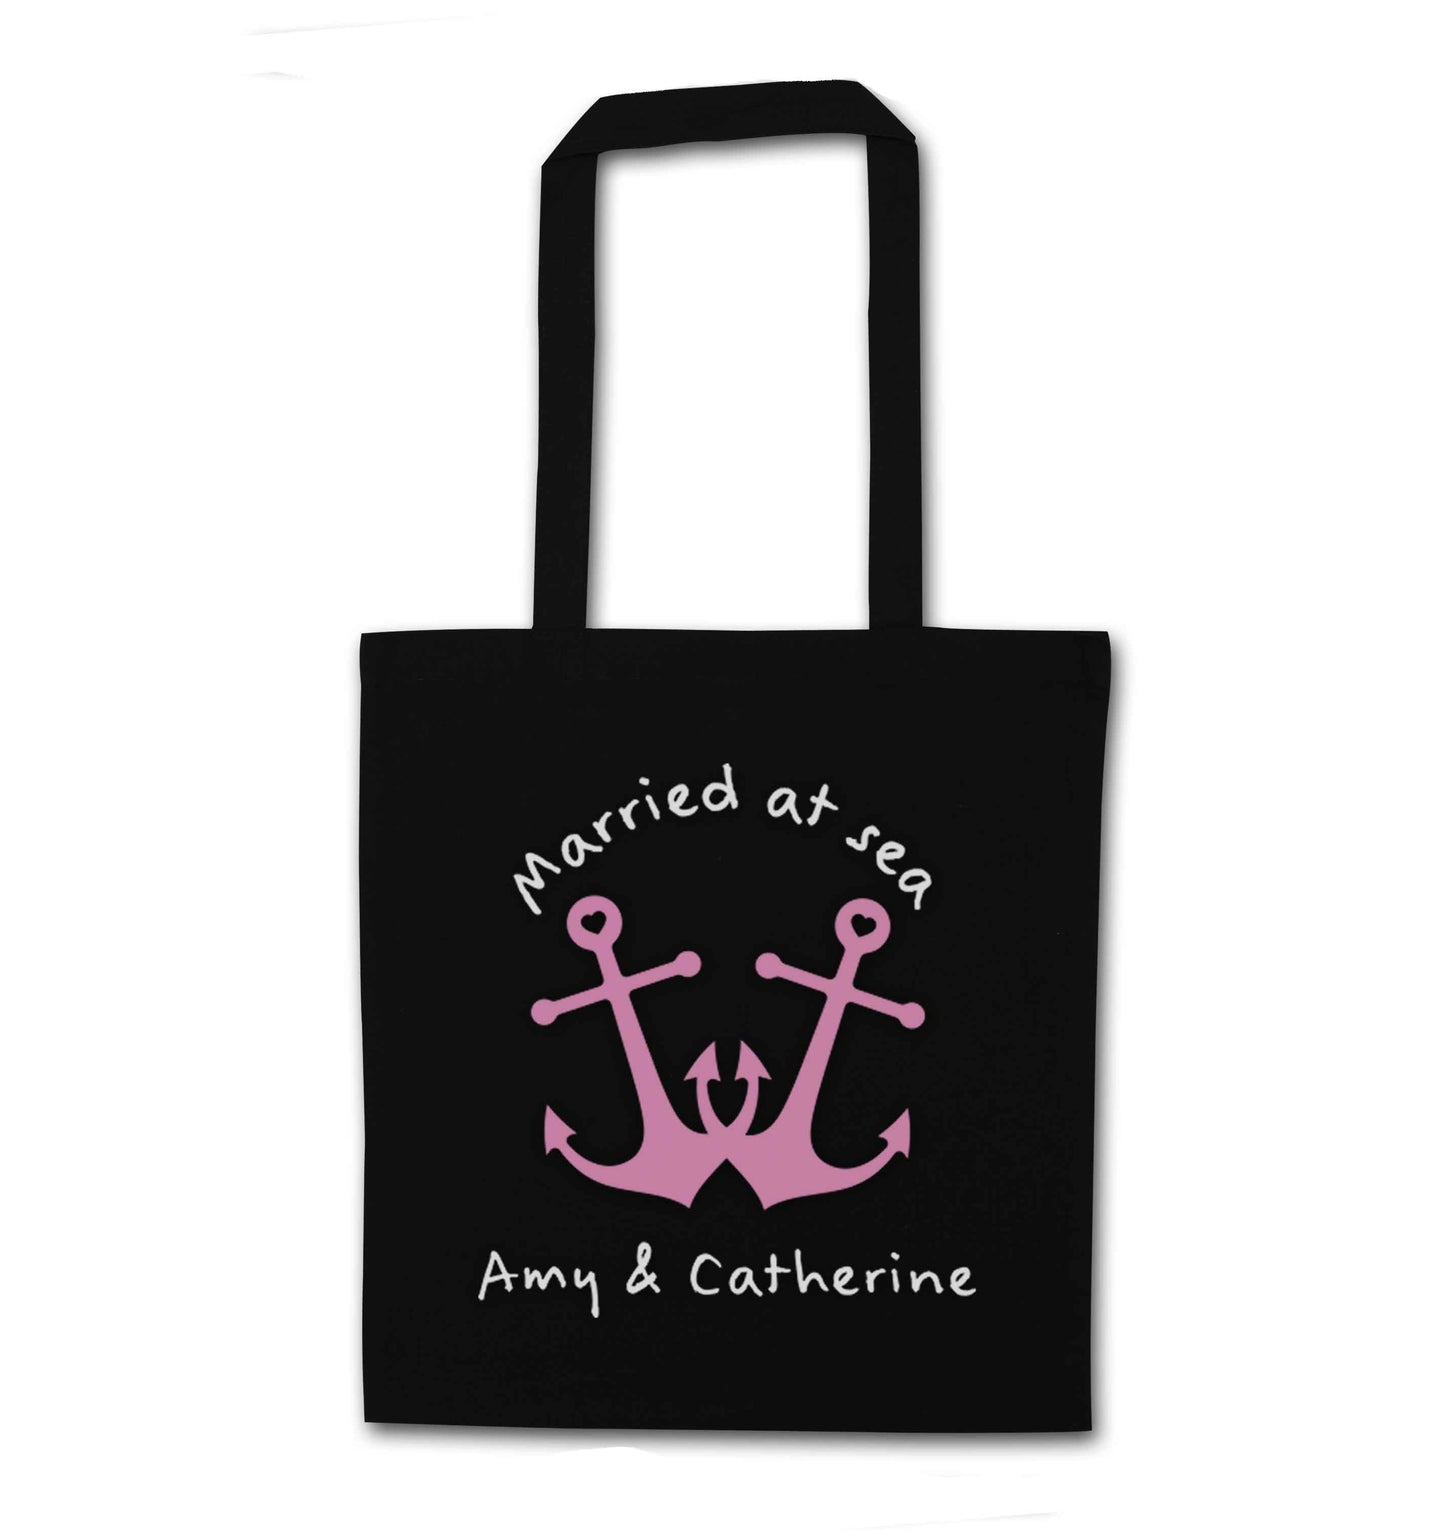 Married at sea pink anchors black tote bag